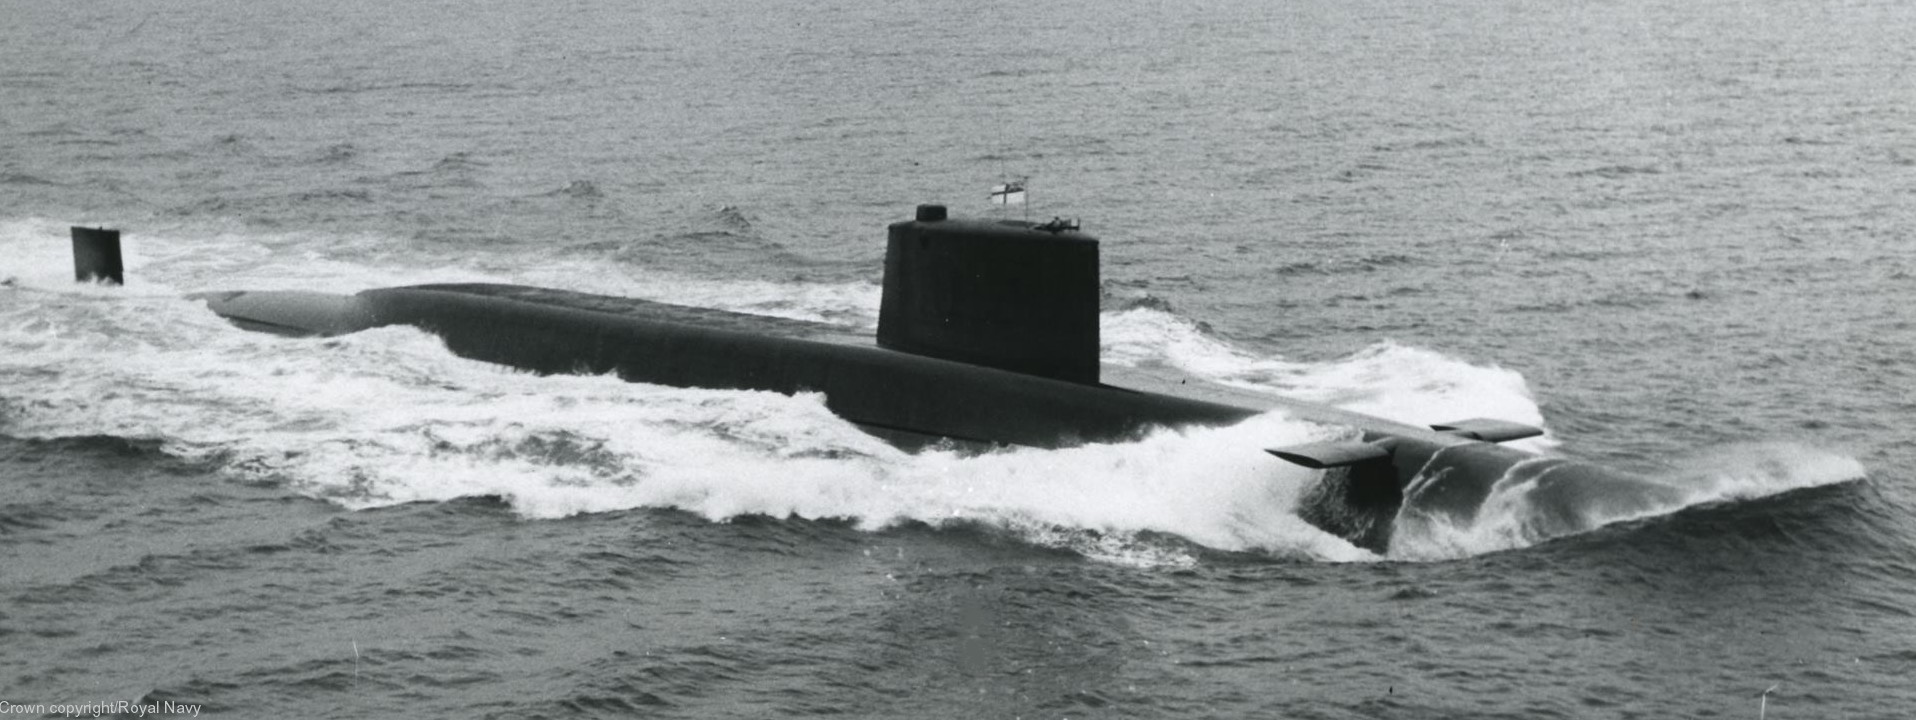 resolution class ballistic missile submarine ssbn ugm-27 polaris slbm royal navy 05c